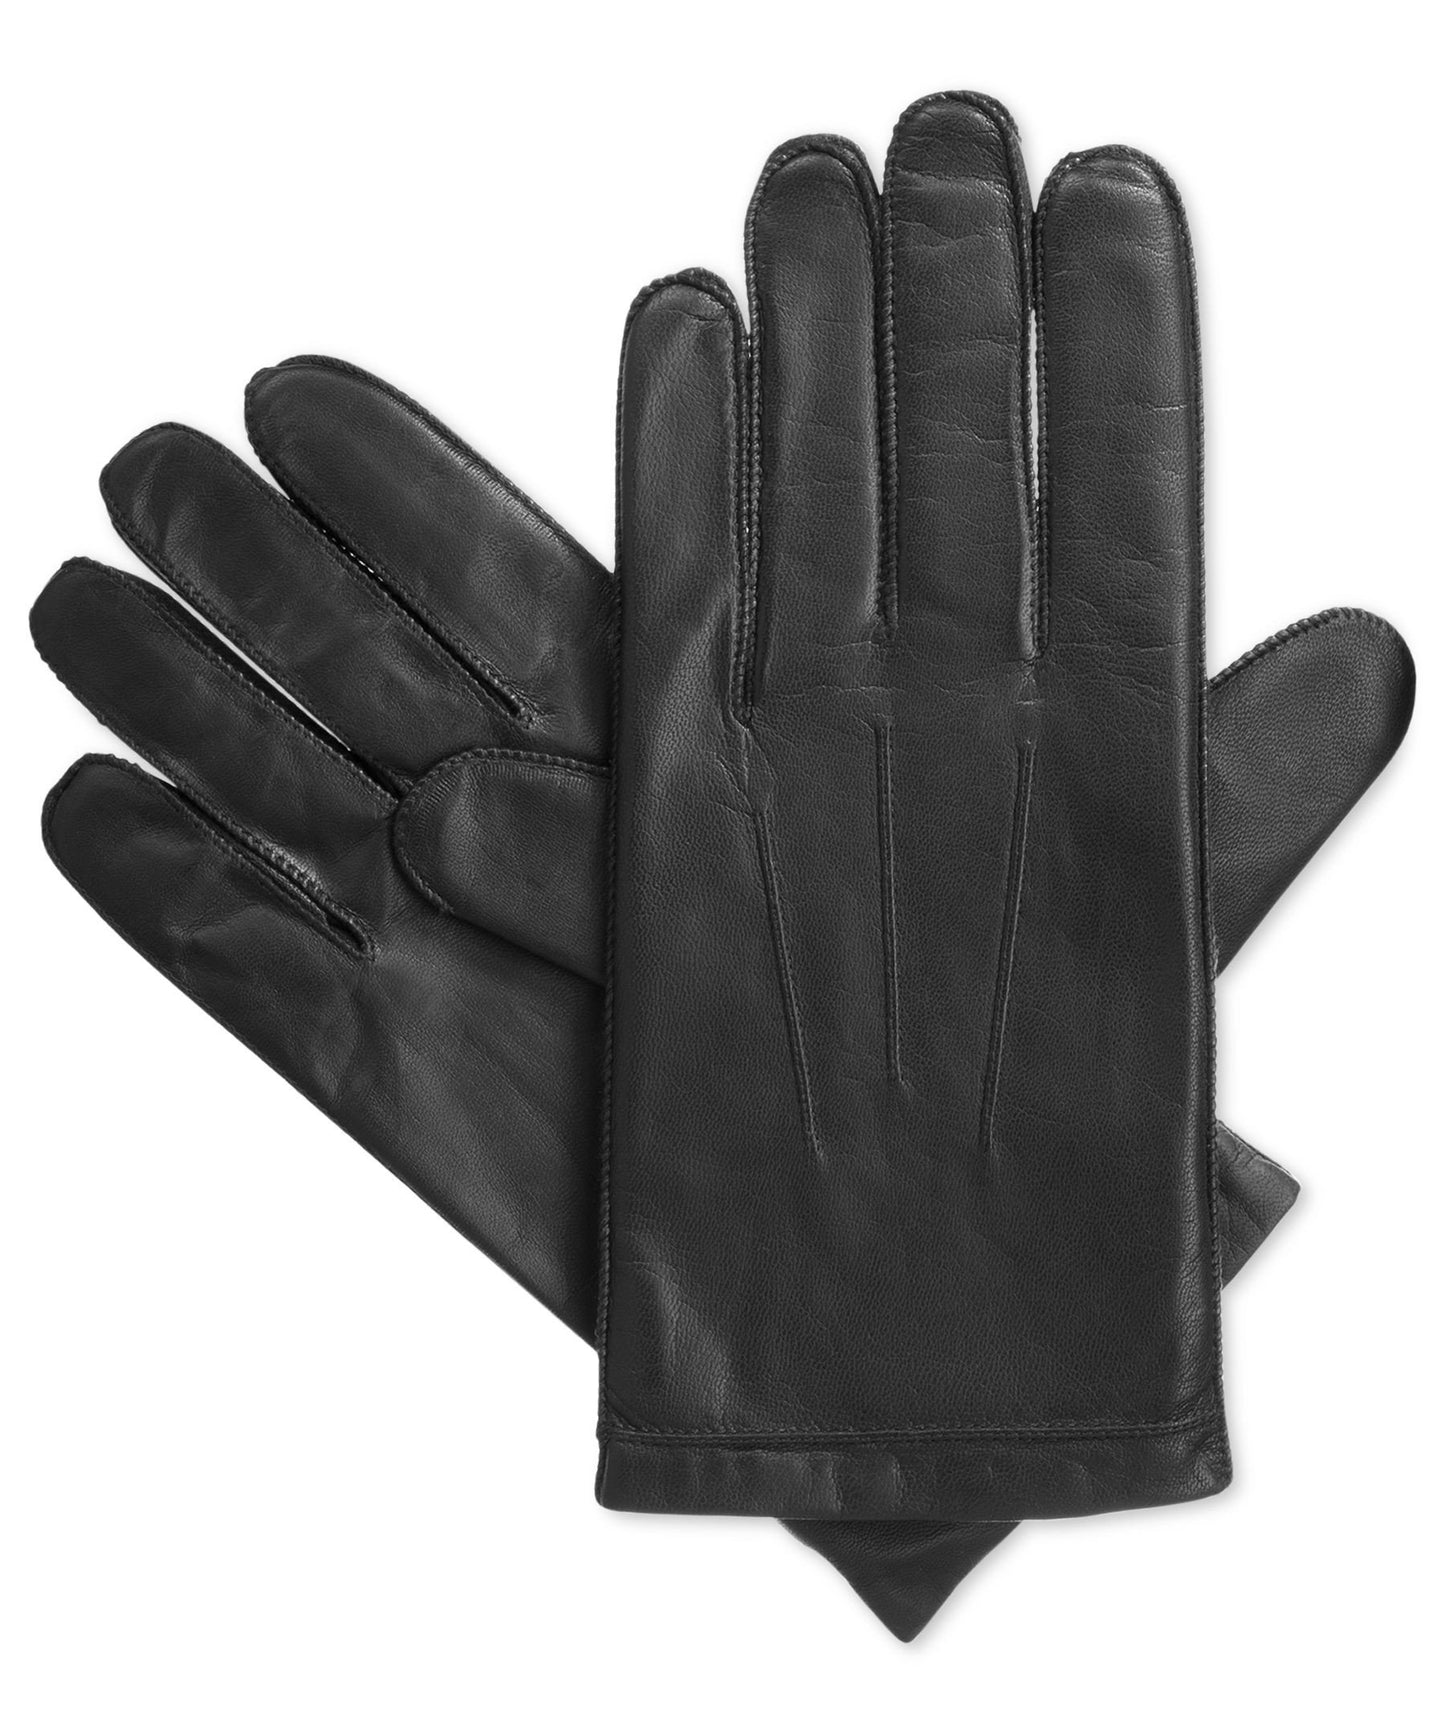 Isotoner Signature Black Smooth Leather SmarTouch Gloves - Medium